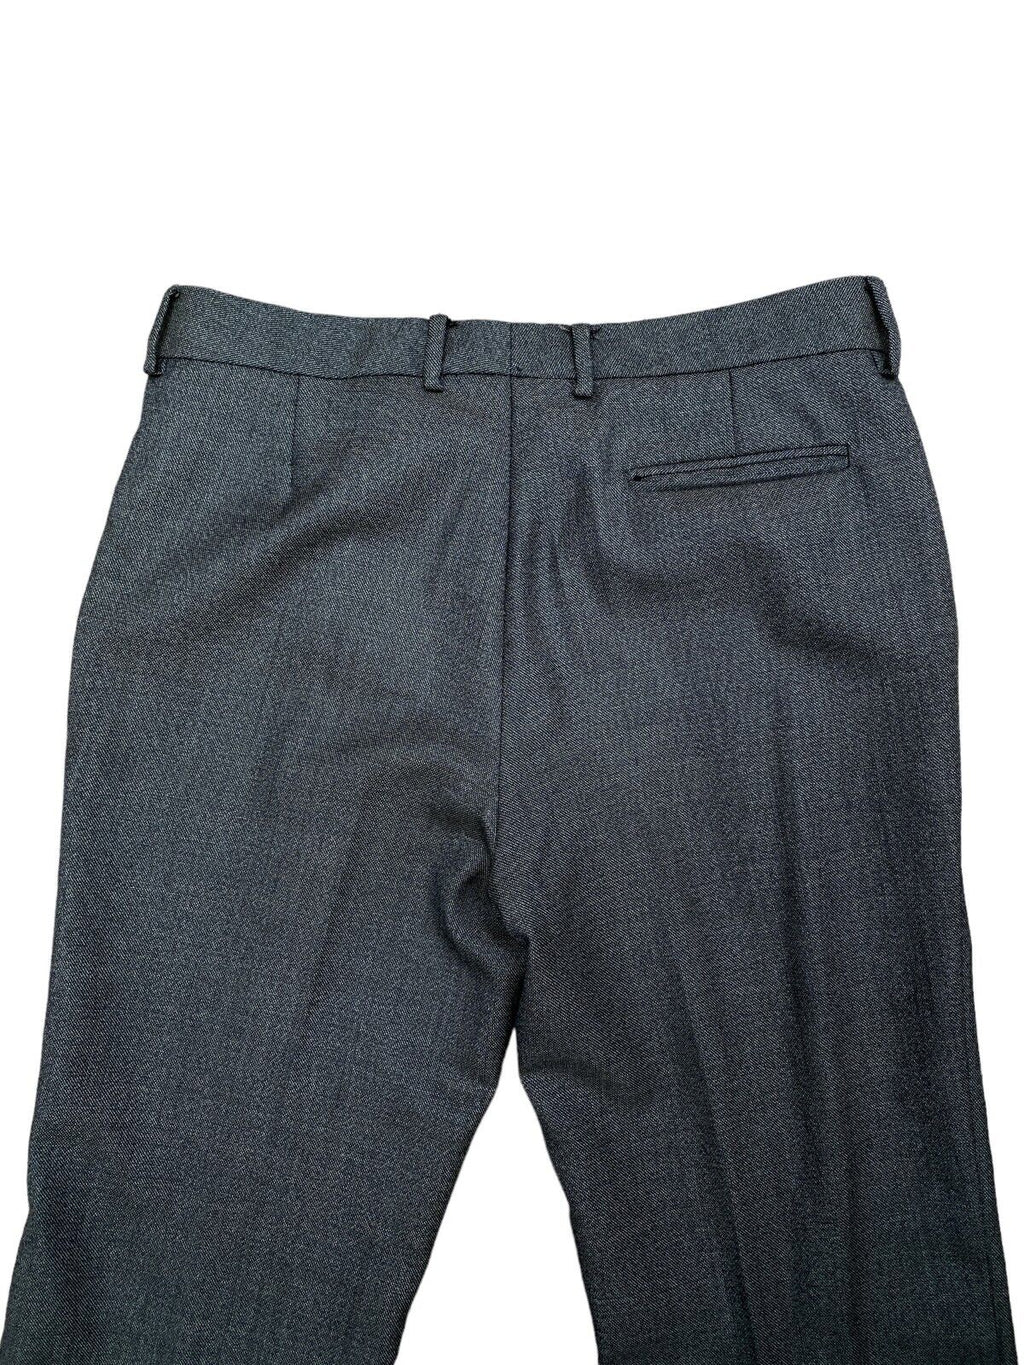 Martin Margiela FW 2001 Grey Wool Pants Size 50 / fits US 34